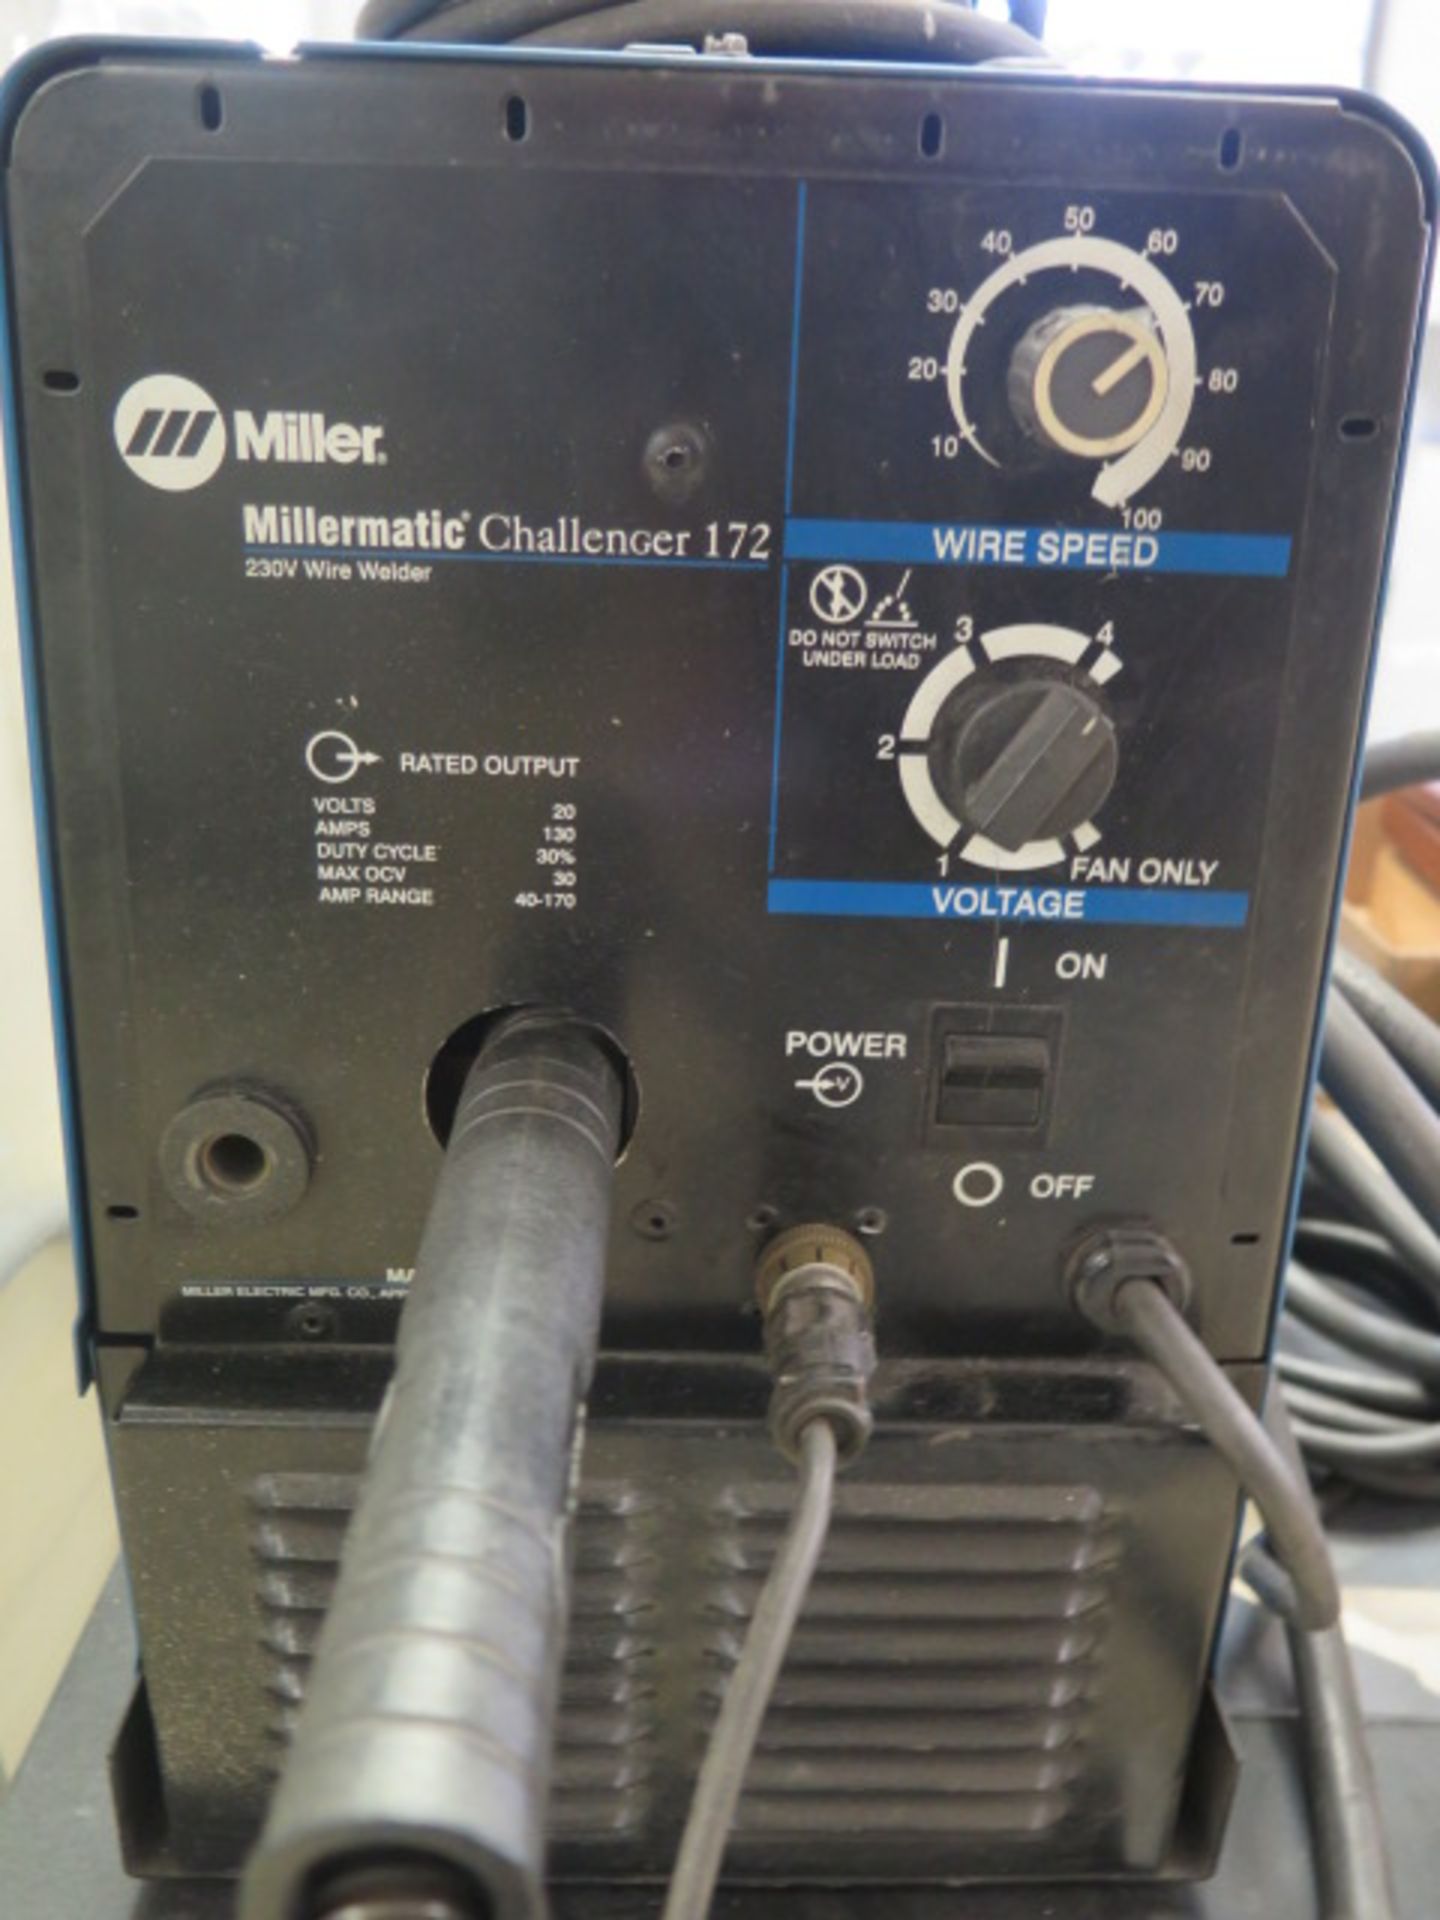 Miller Millermatic Challenger 172 230 Volt Wire Welder s/n KJ276749 - Image 2 of 5